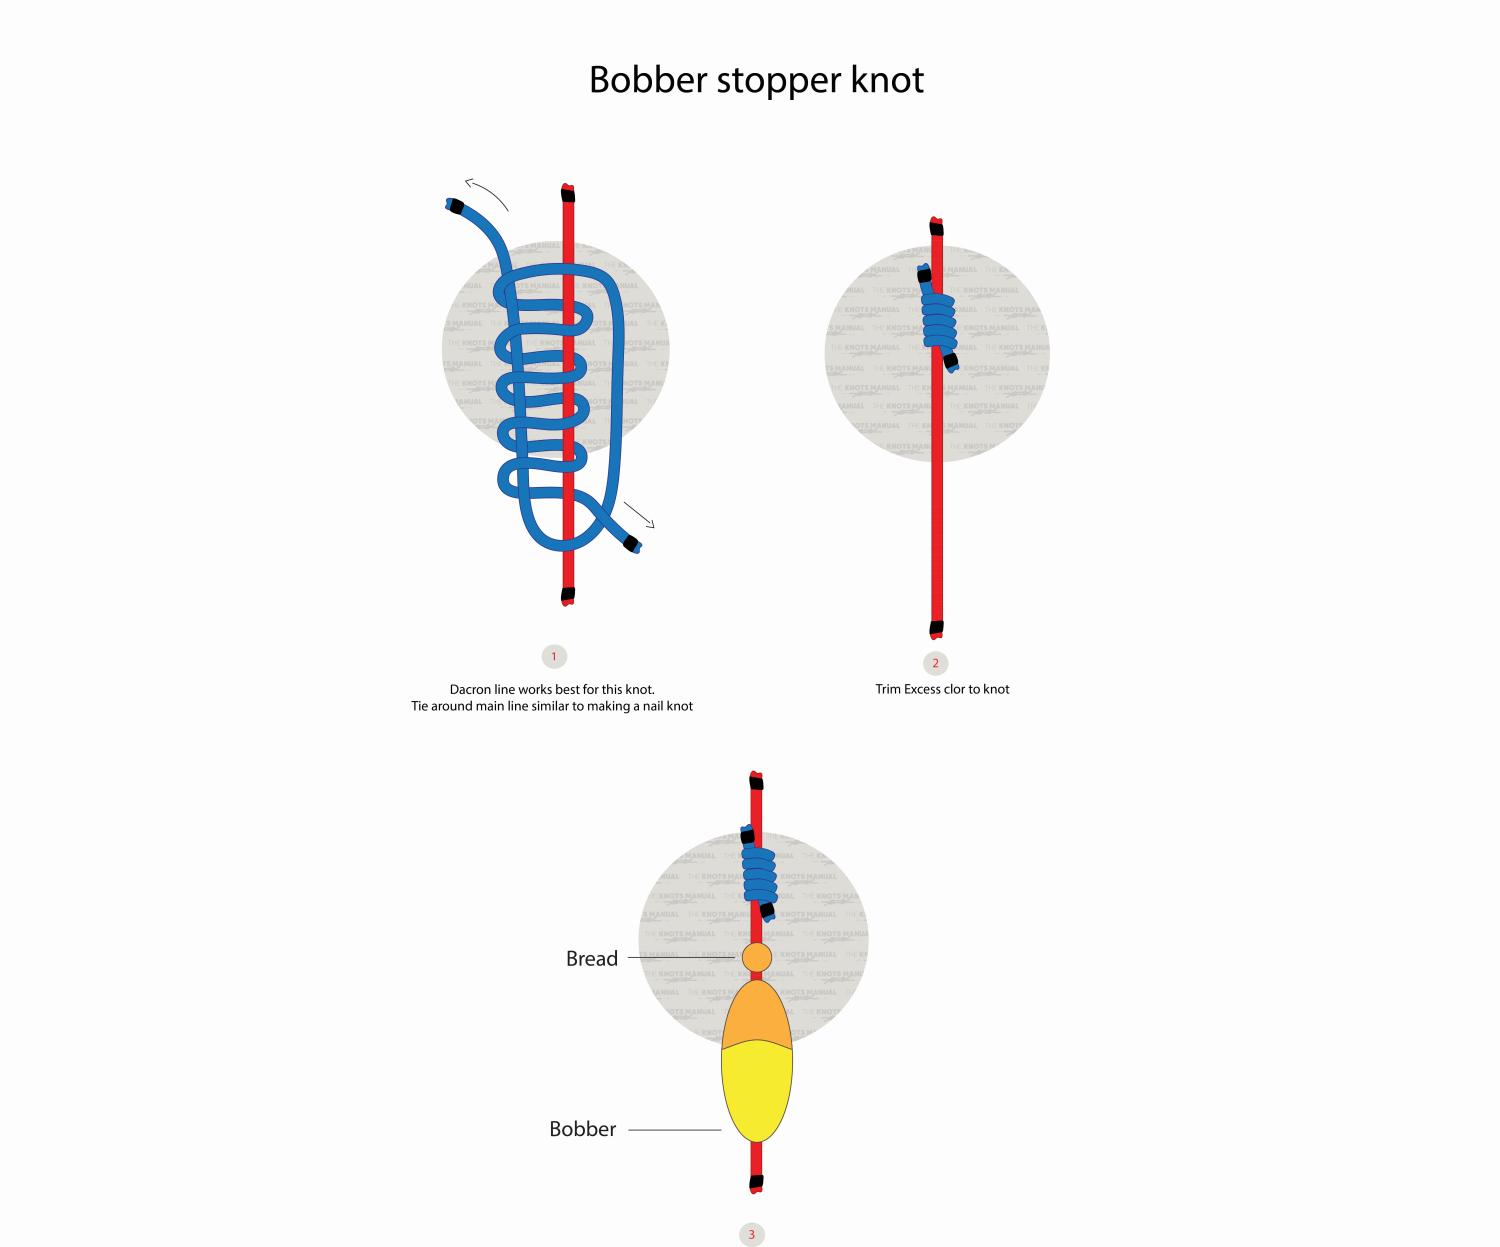 Bobber Stopper Knot step  by step